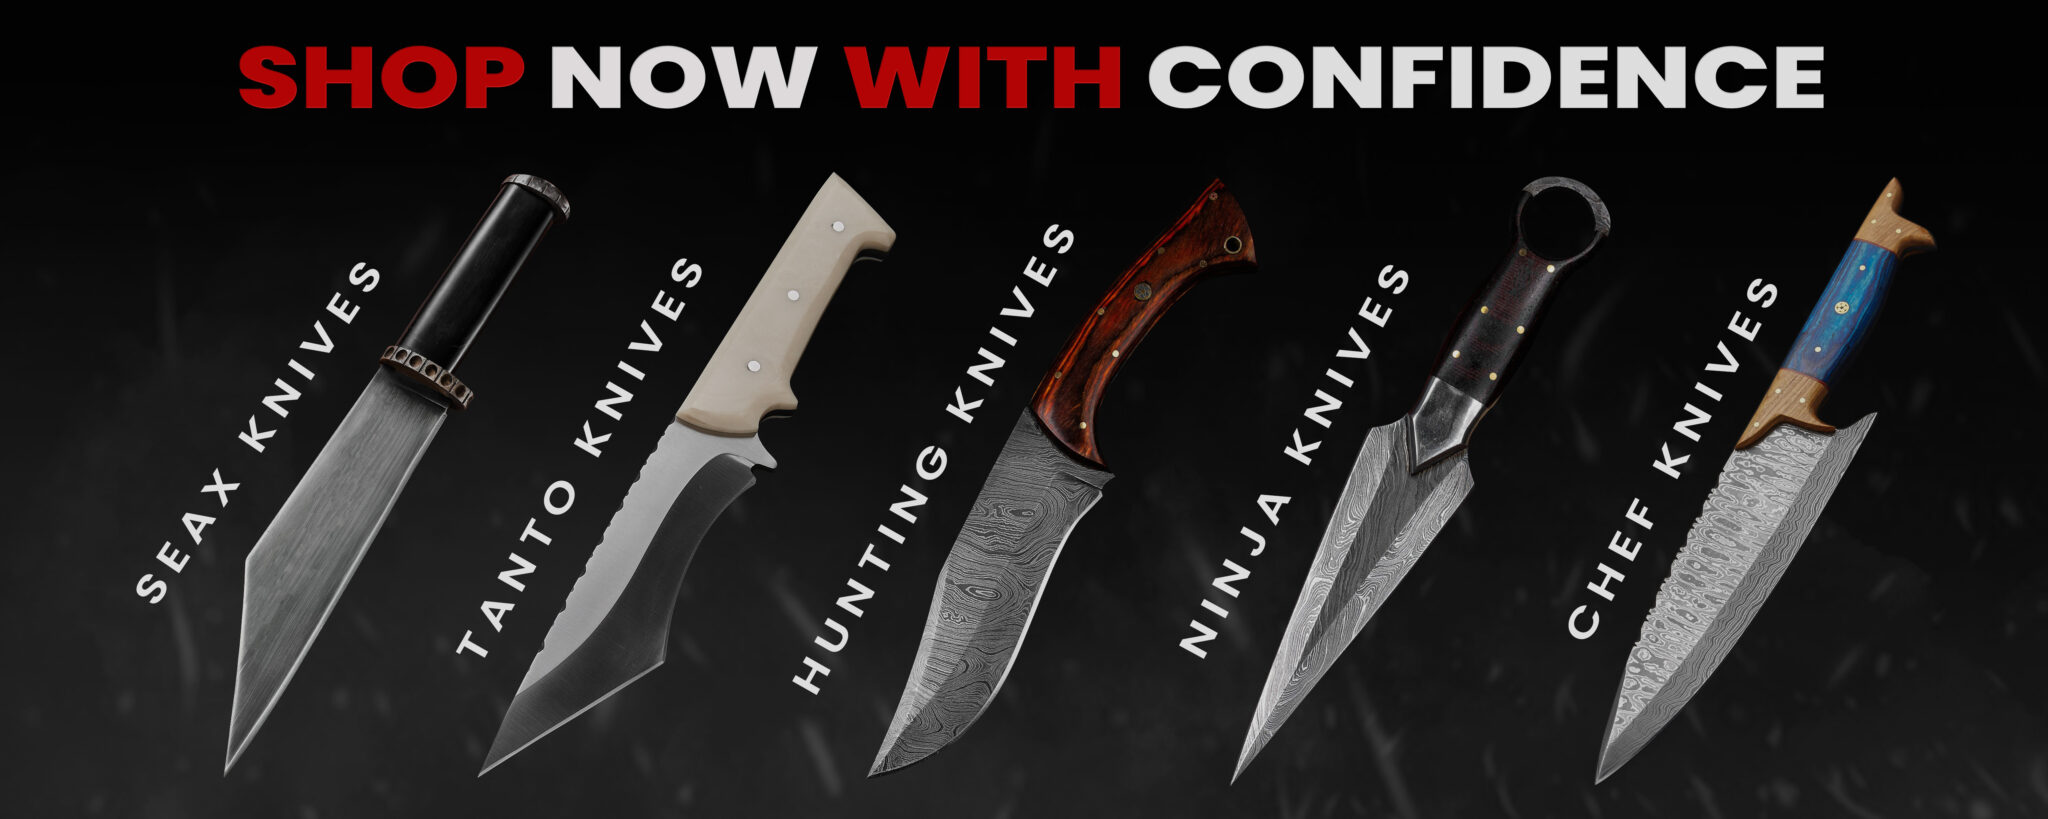 viking knives for sale, hunting knives, tactical knives